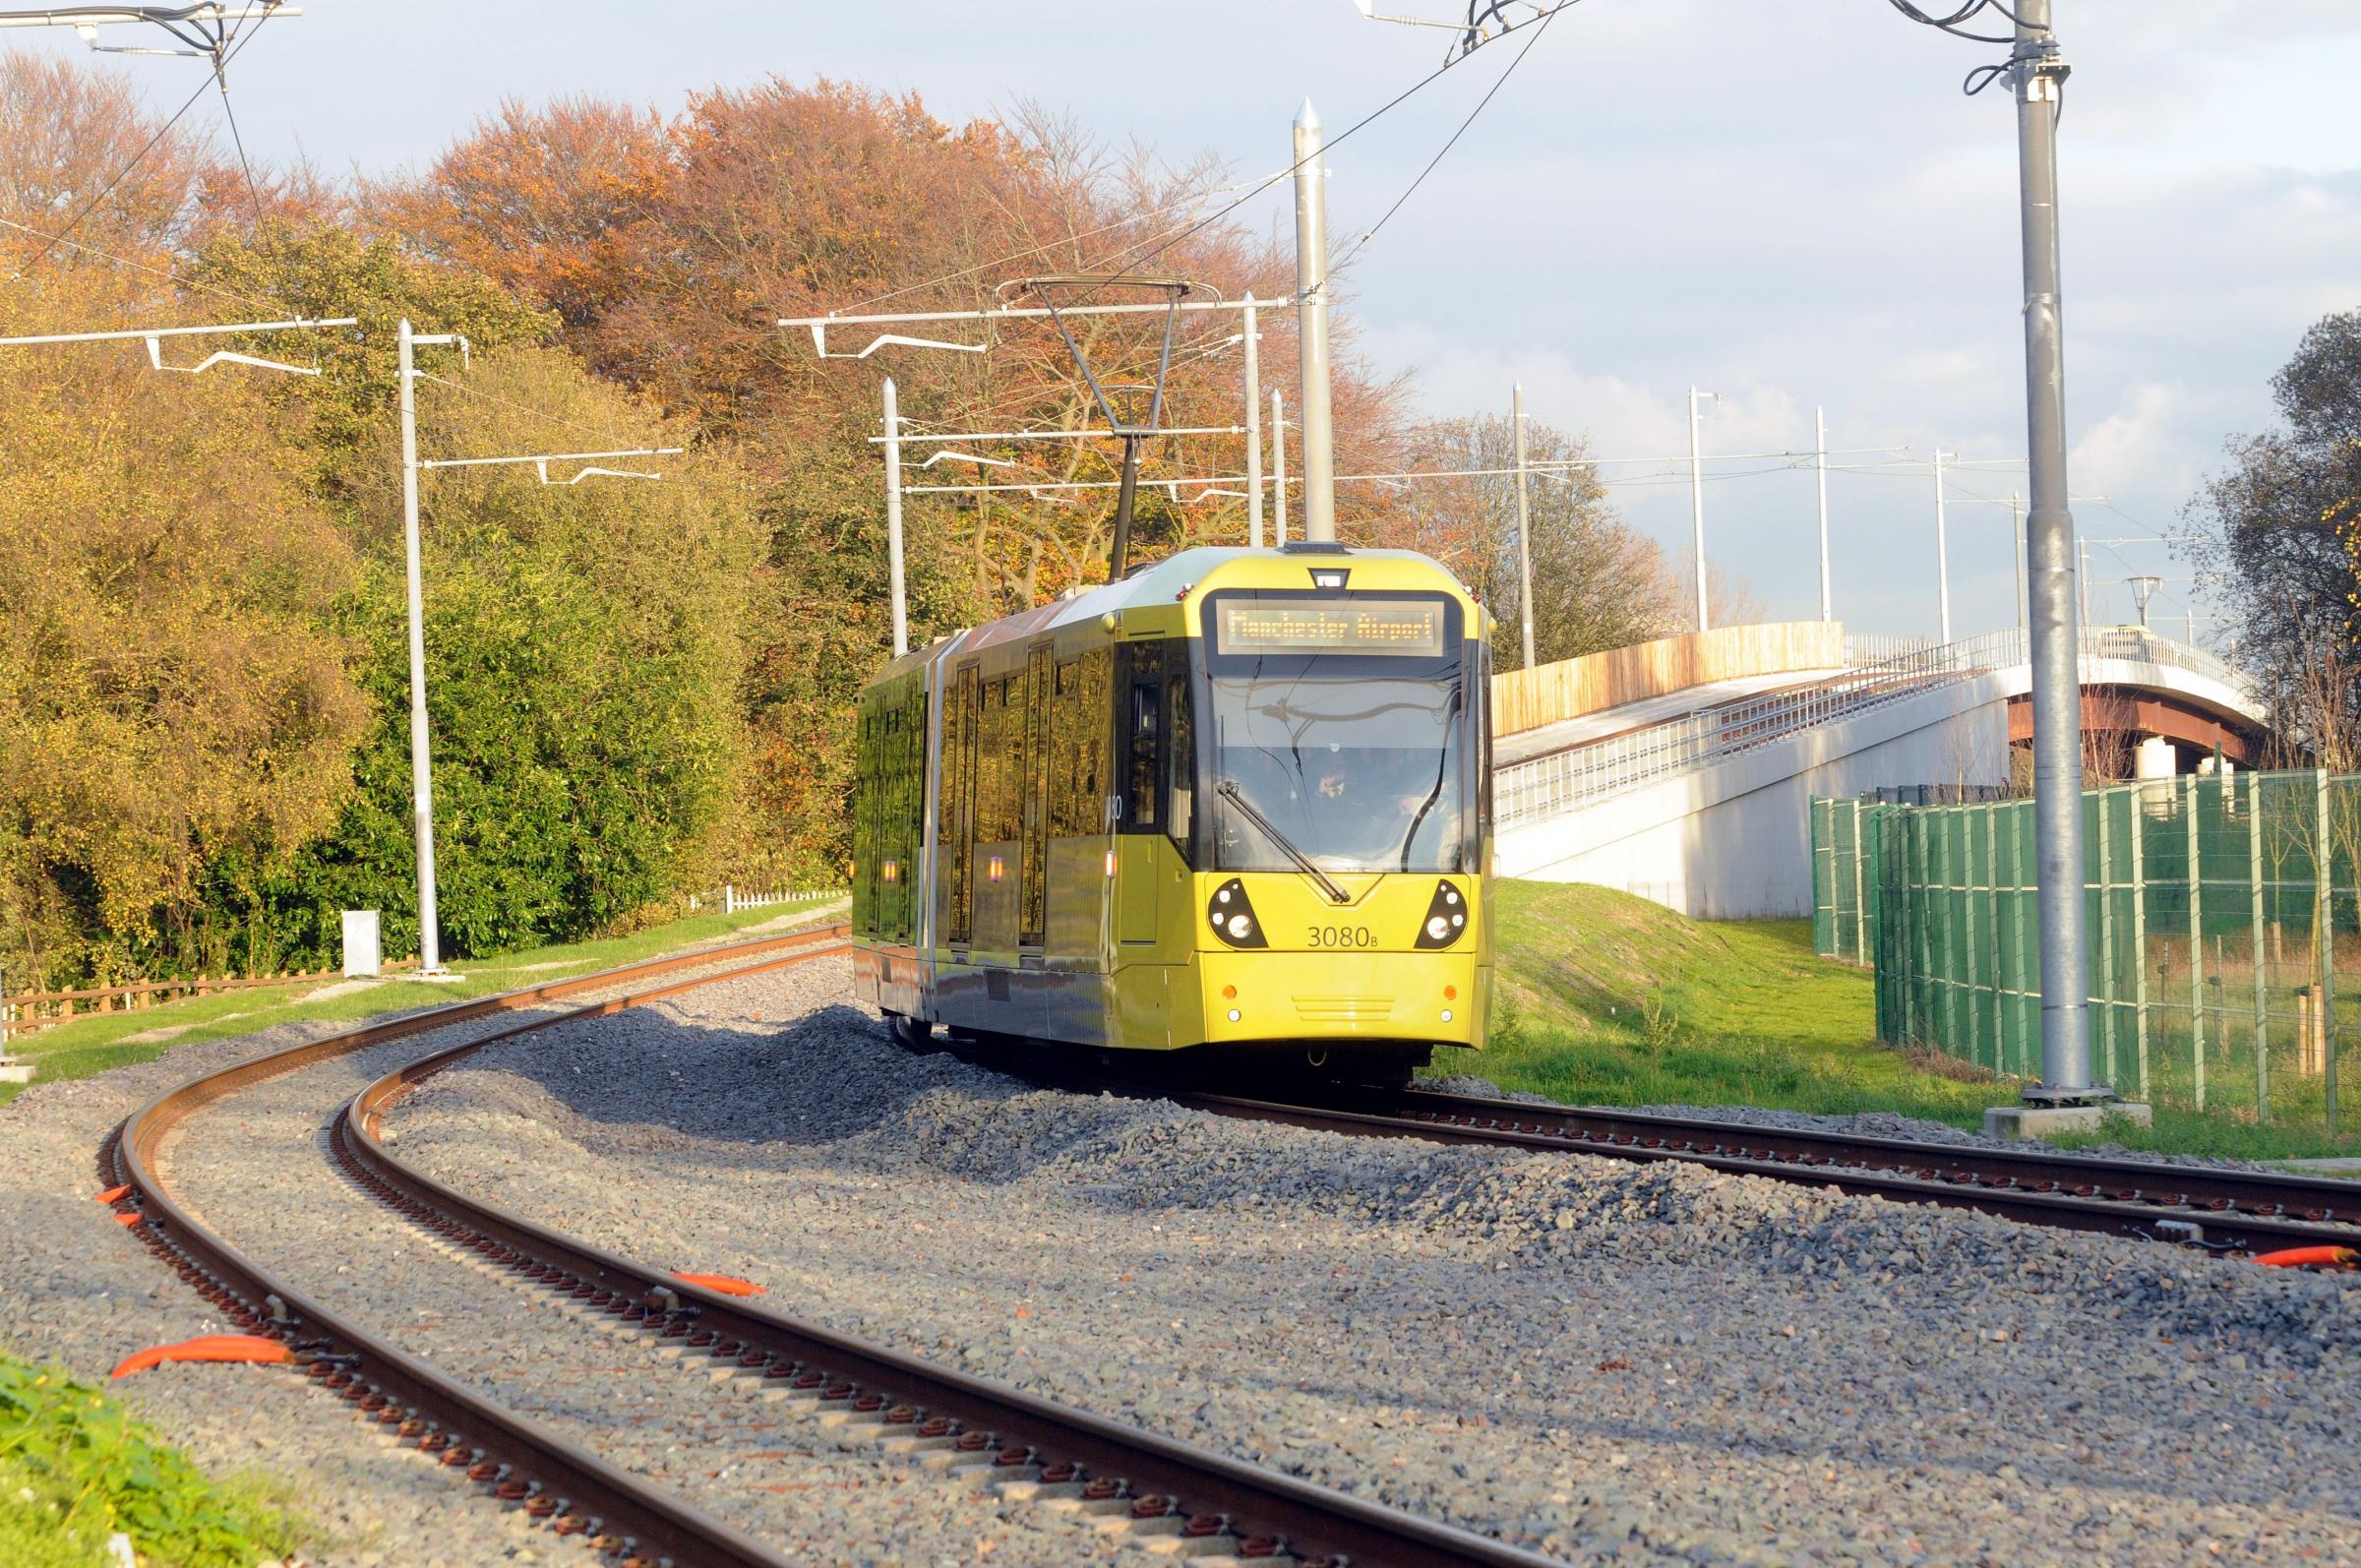 Calls for expansion of Metrolink to improve transport links